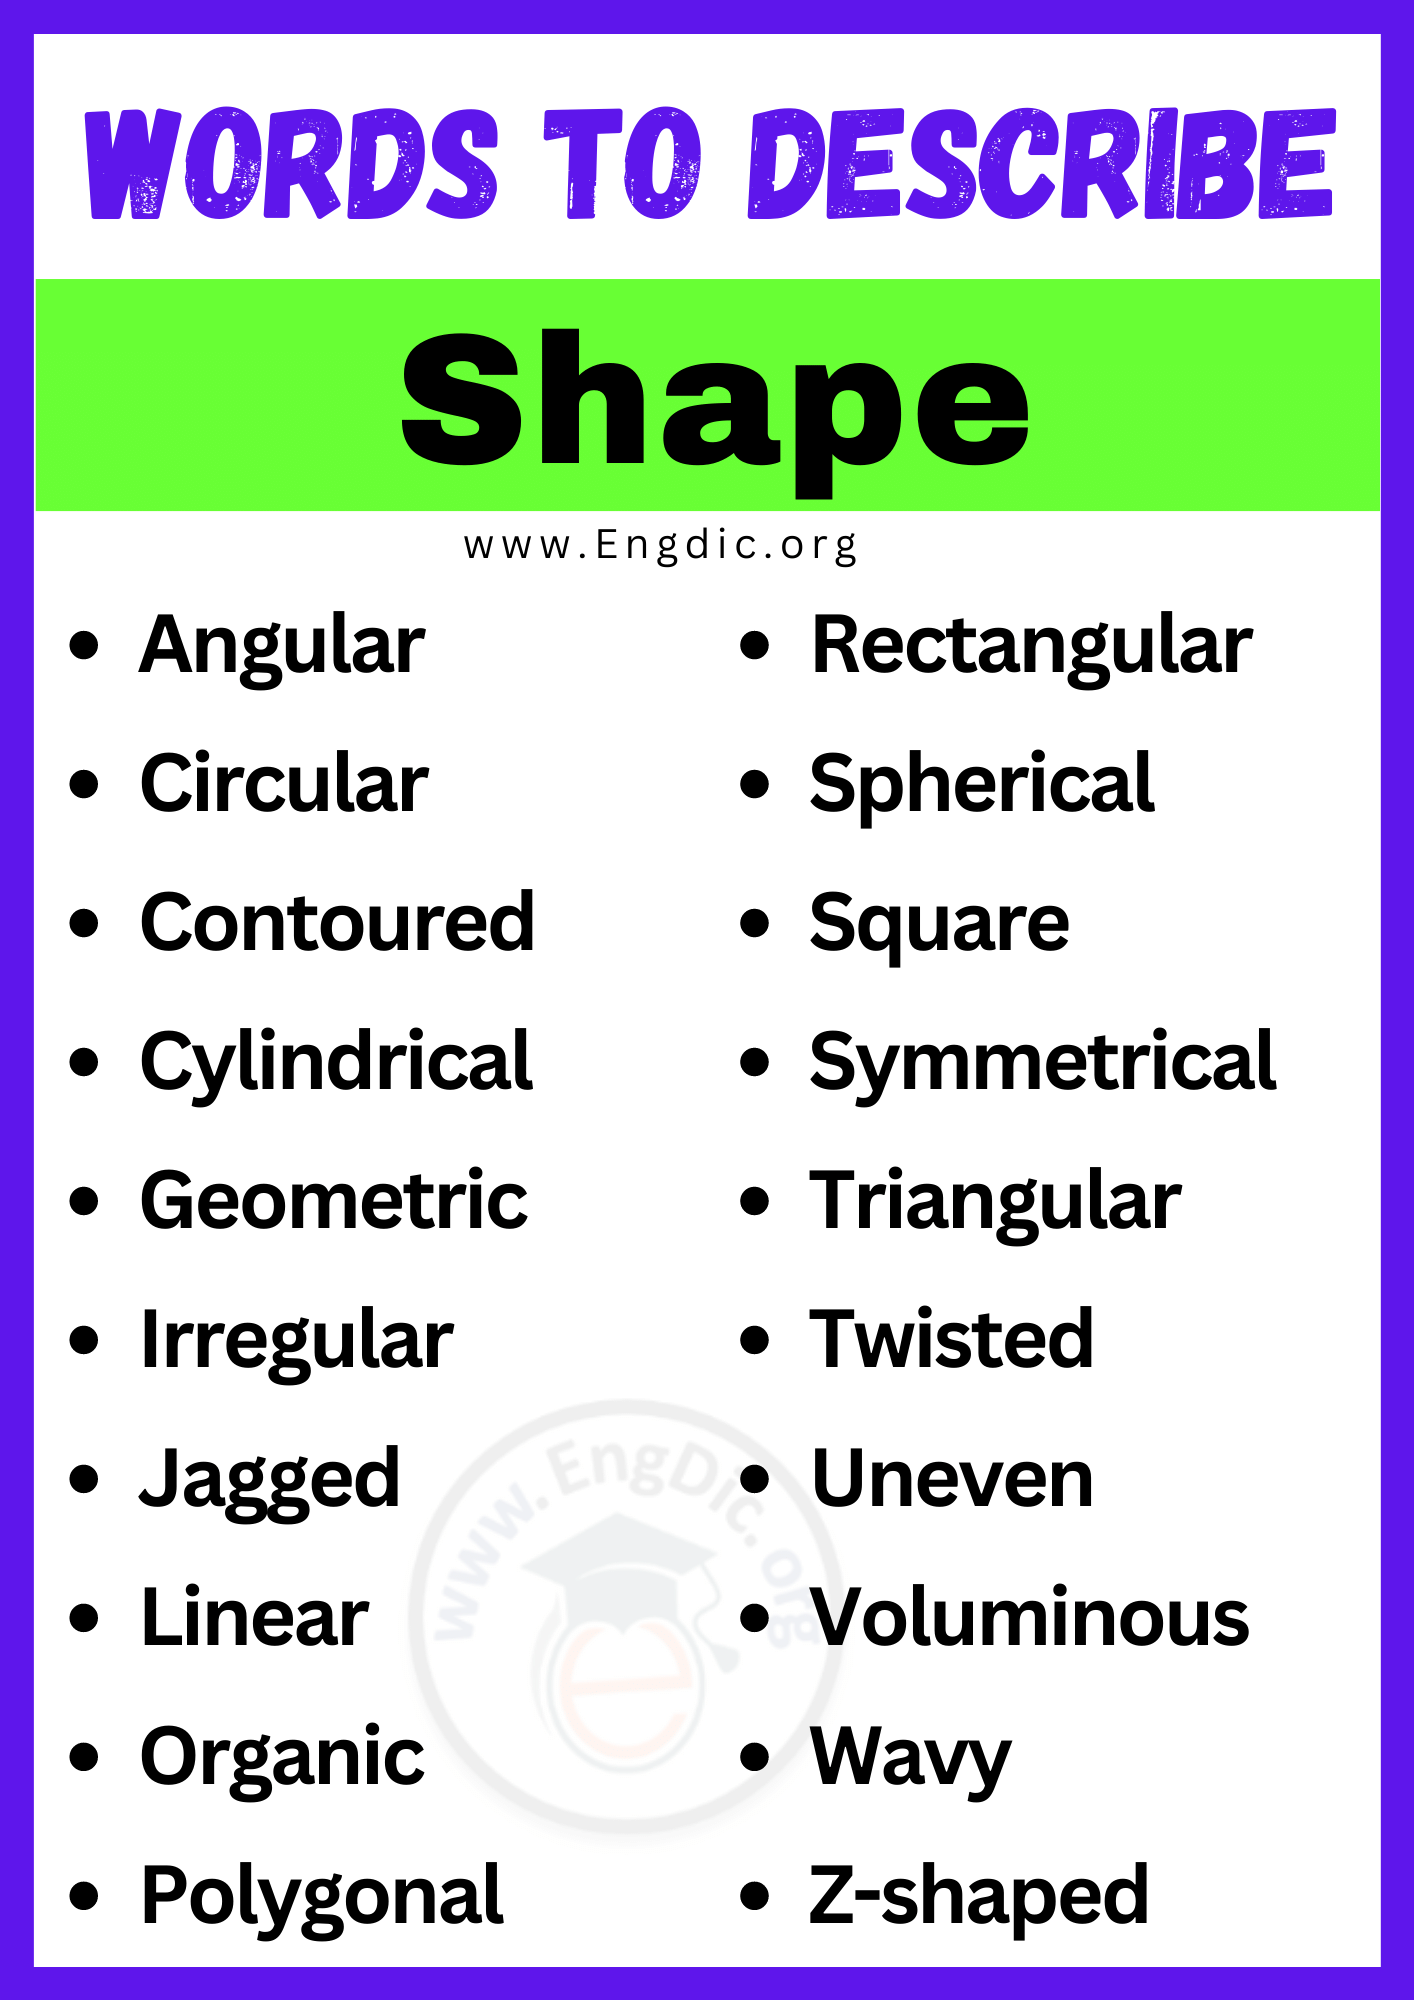 Words to Describe Shape